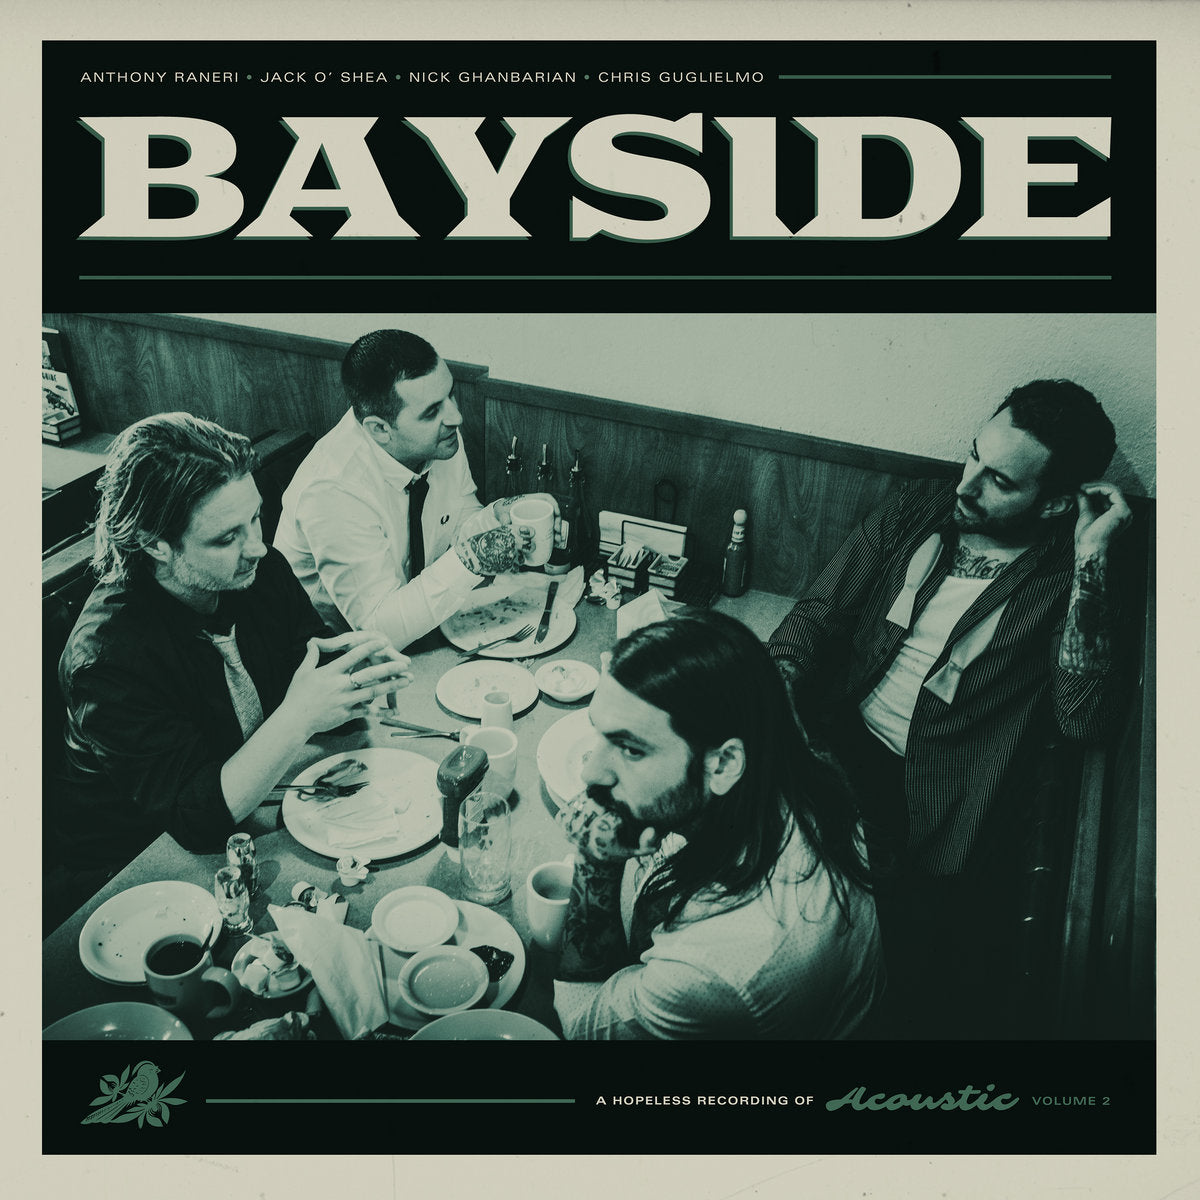 Bayside "Acoustic Volume 2" CD